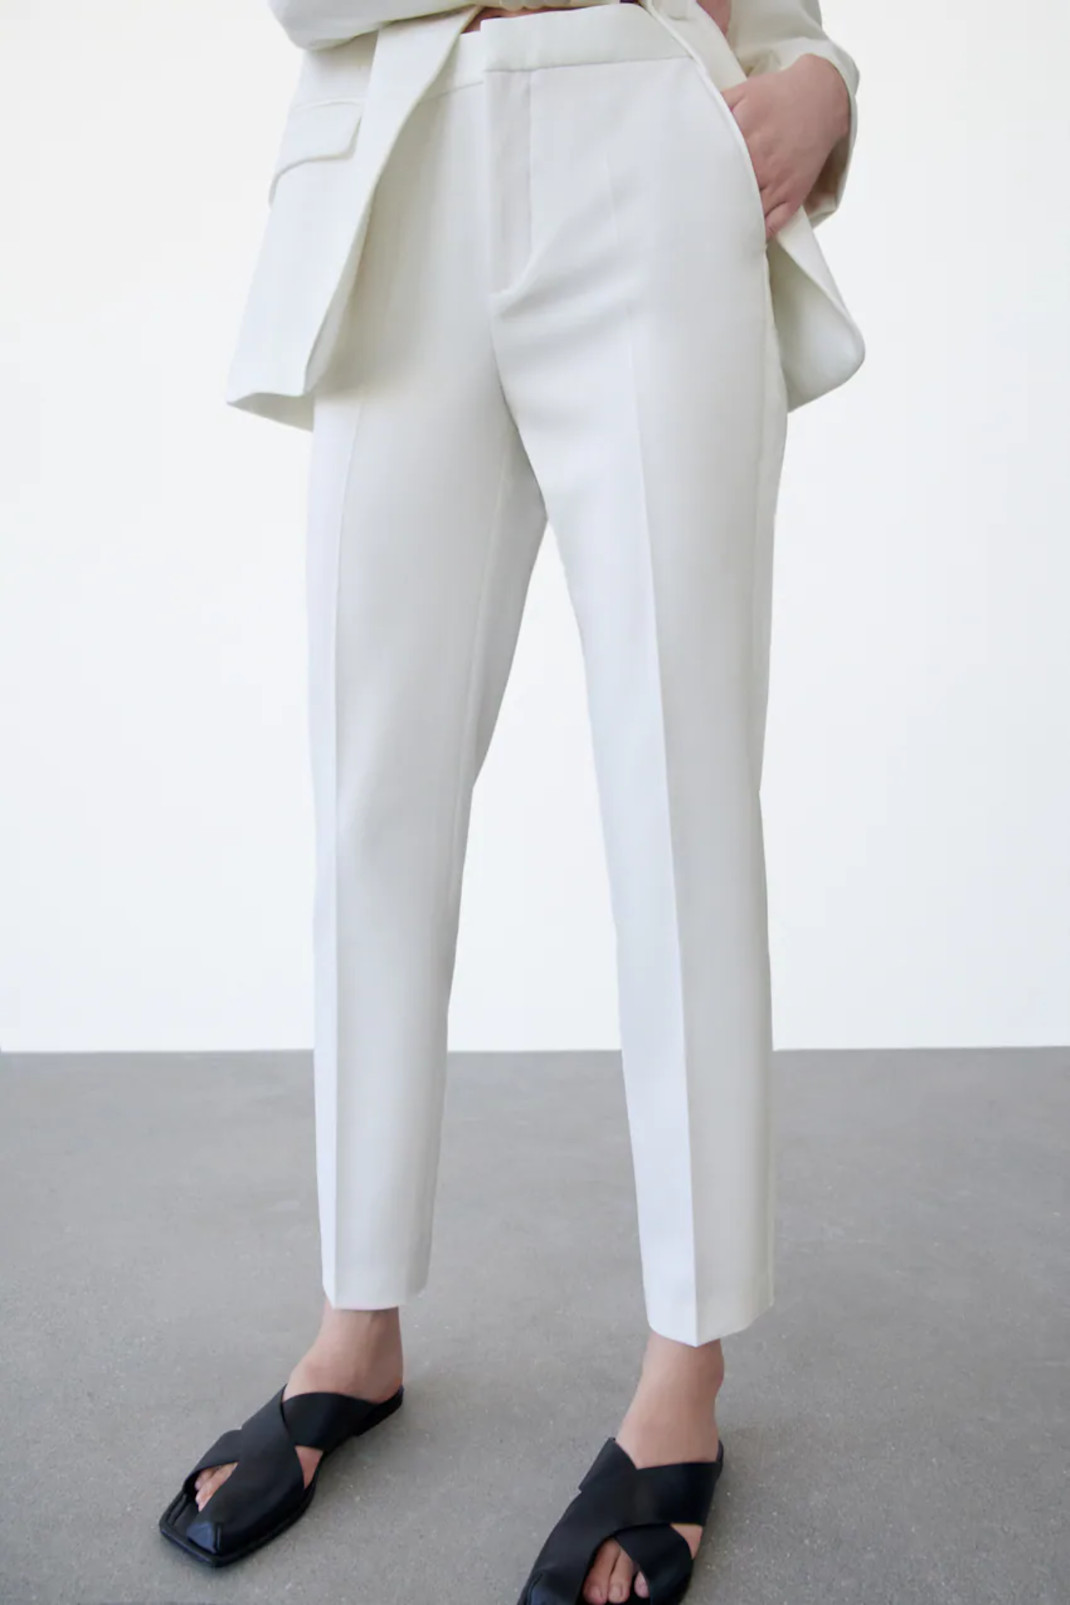 H Mάρα Ζαχαρέα με λευκό κοστούμι Zara